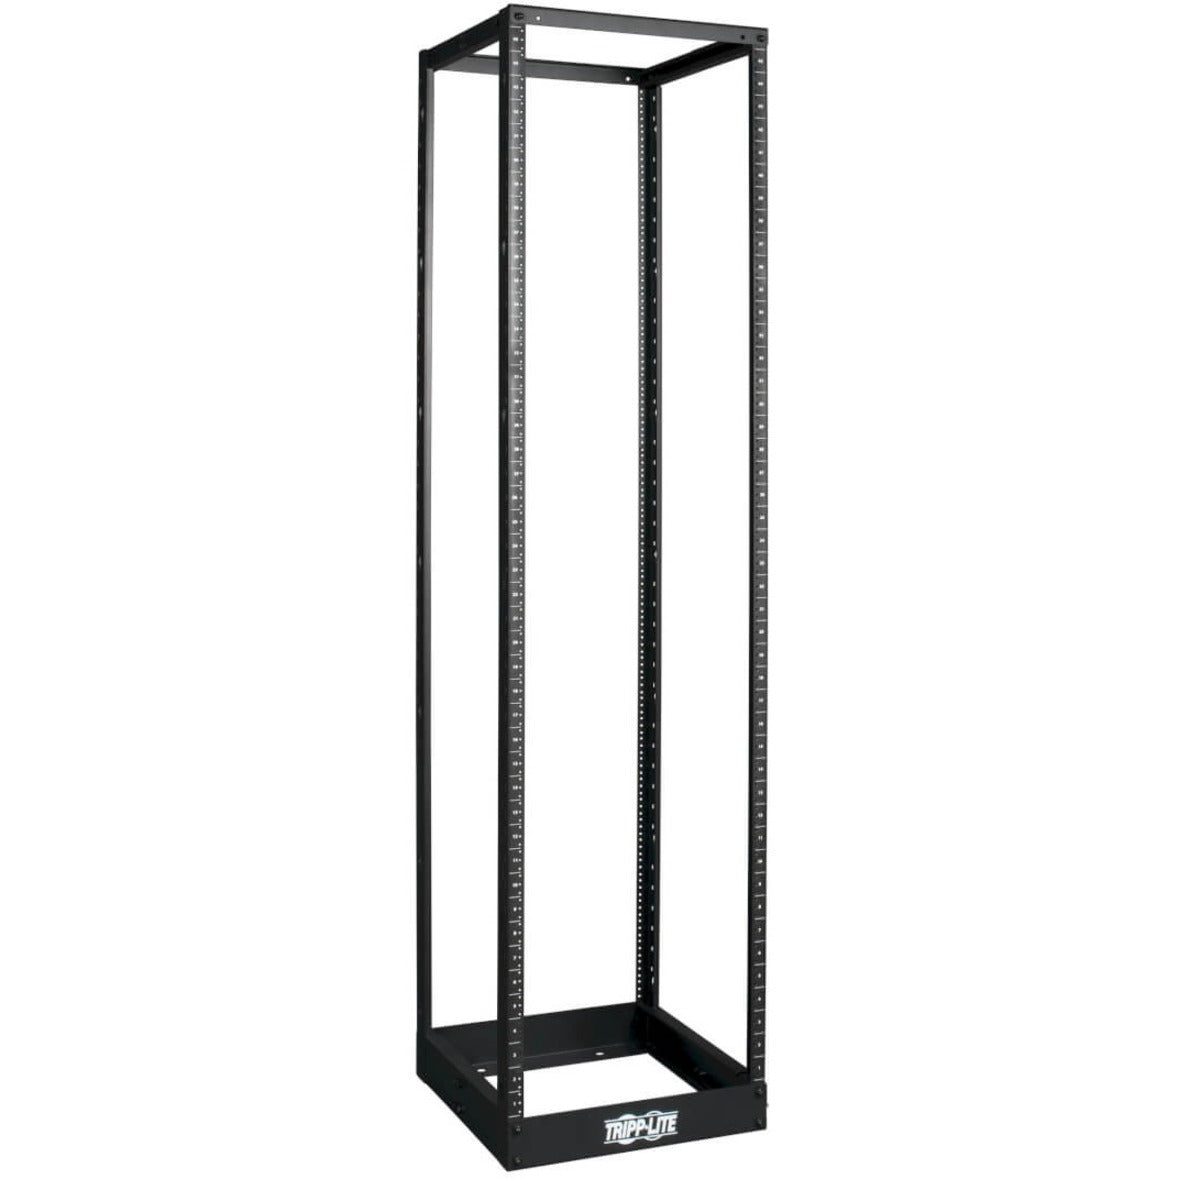 Tripp Lite SR4POST 4-Post Open Frame Rack Cabinet - 45U, 19" Width, 84.3" Height, 1000 lb Maximum Weight Capacity